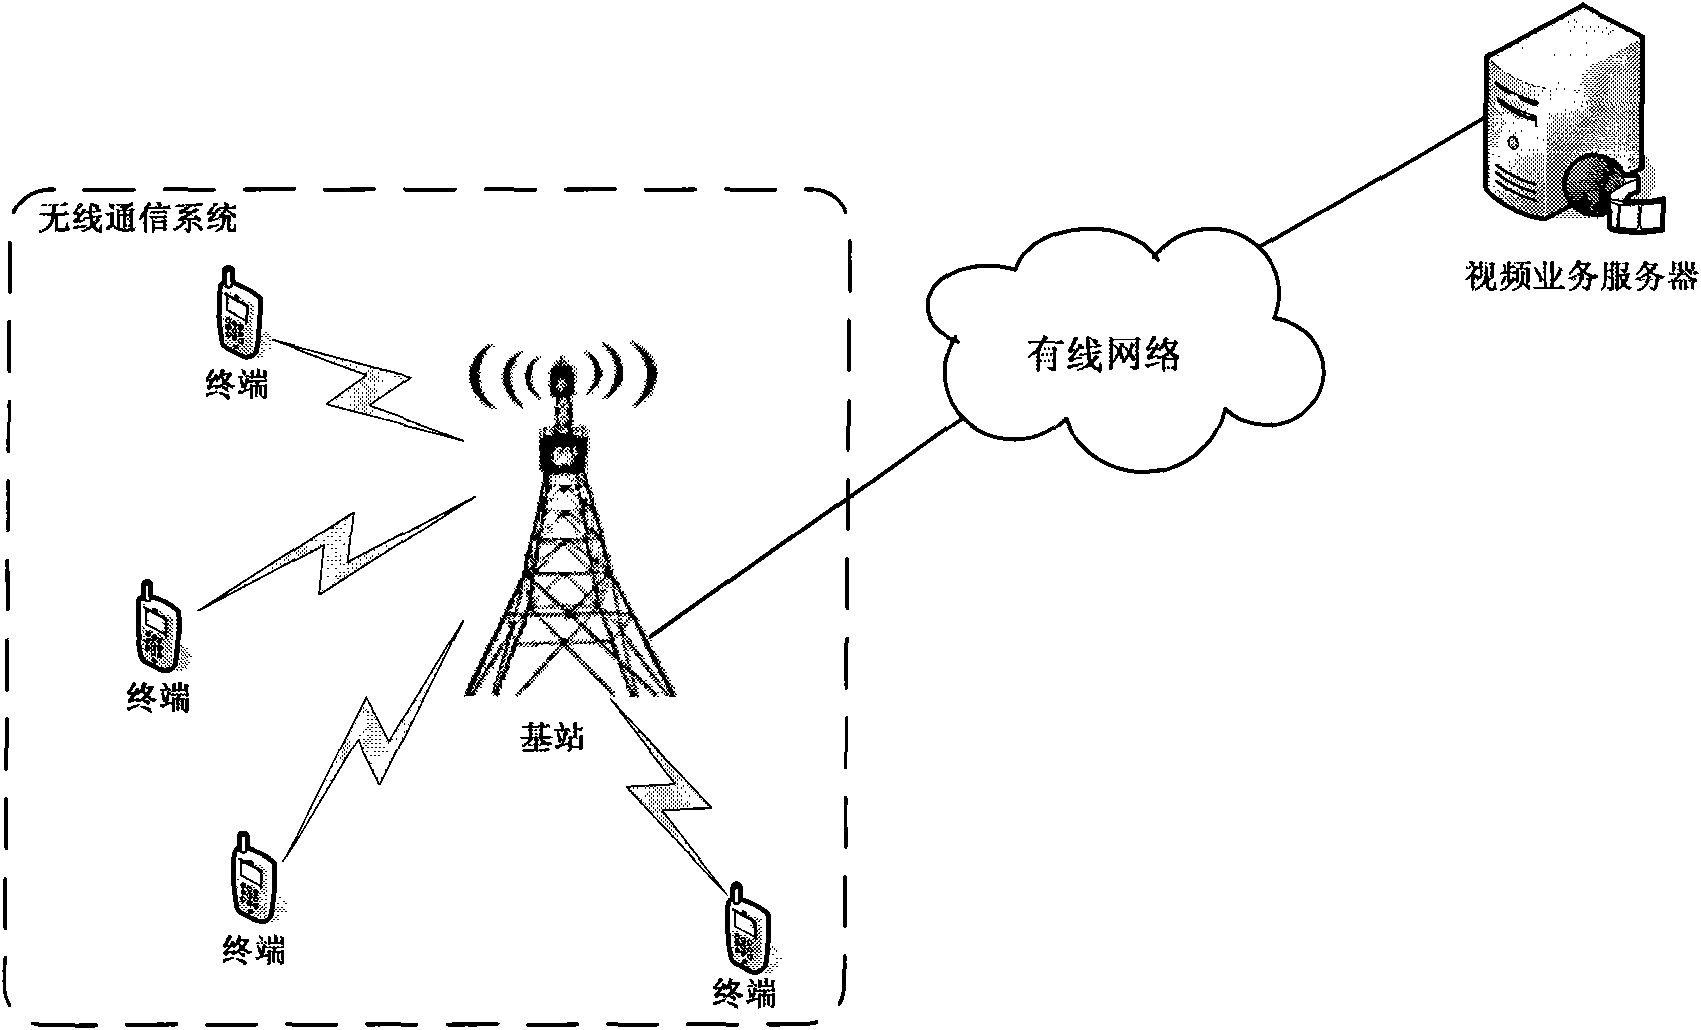 Cross-layer optimization method of video service in wireless communication